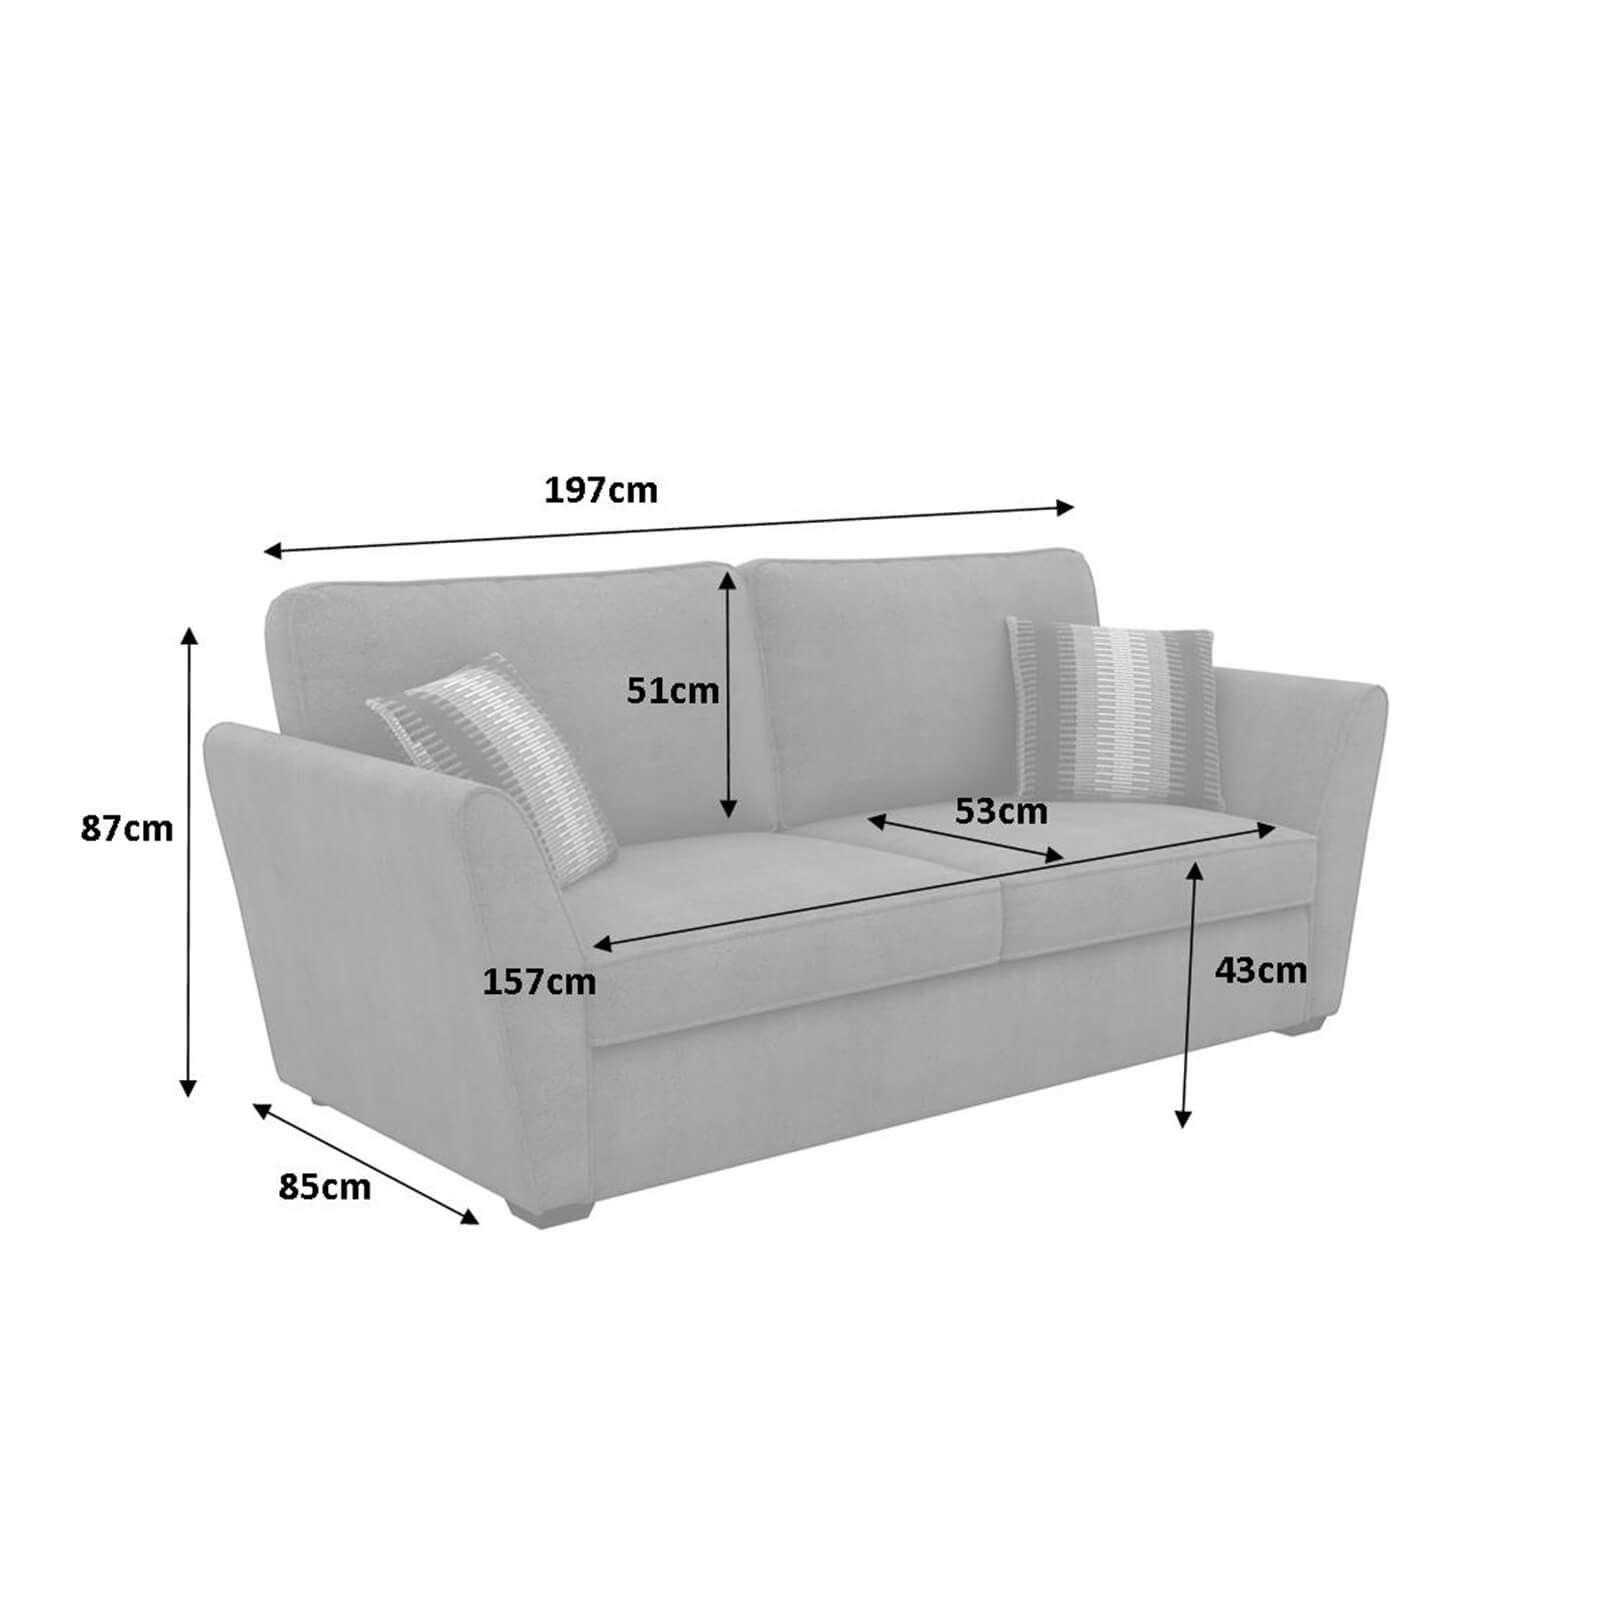 Oxford 3 Seater Sofa - Black